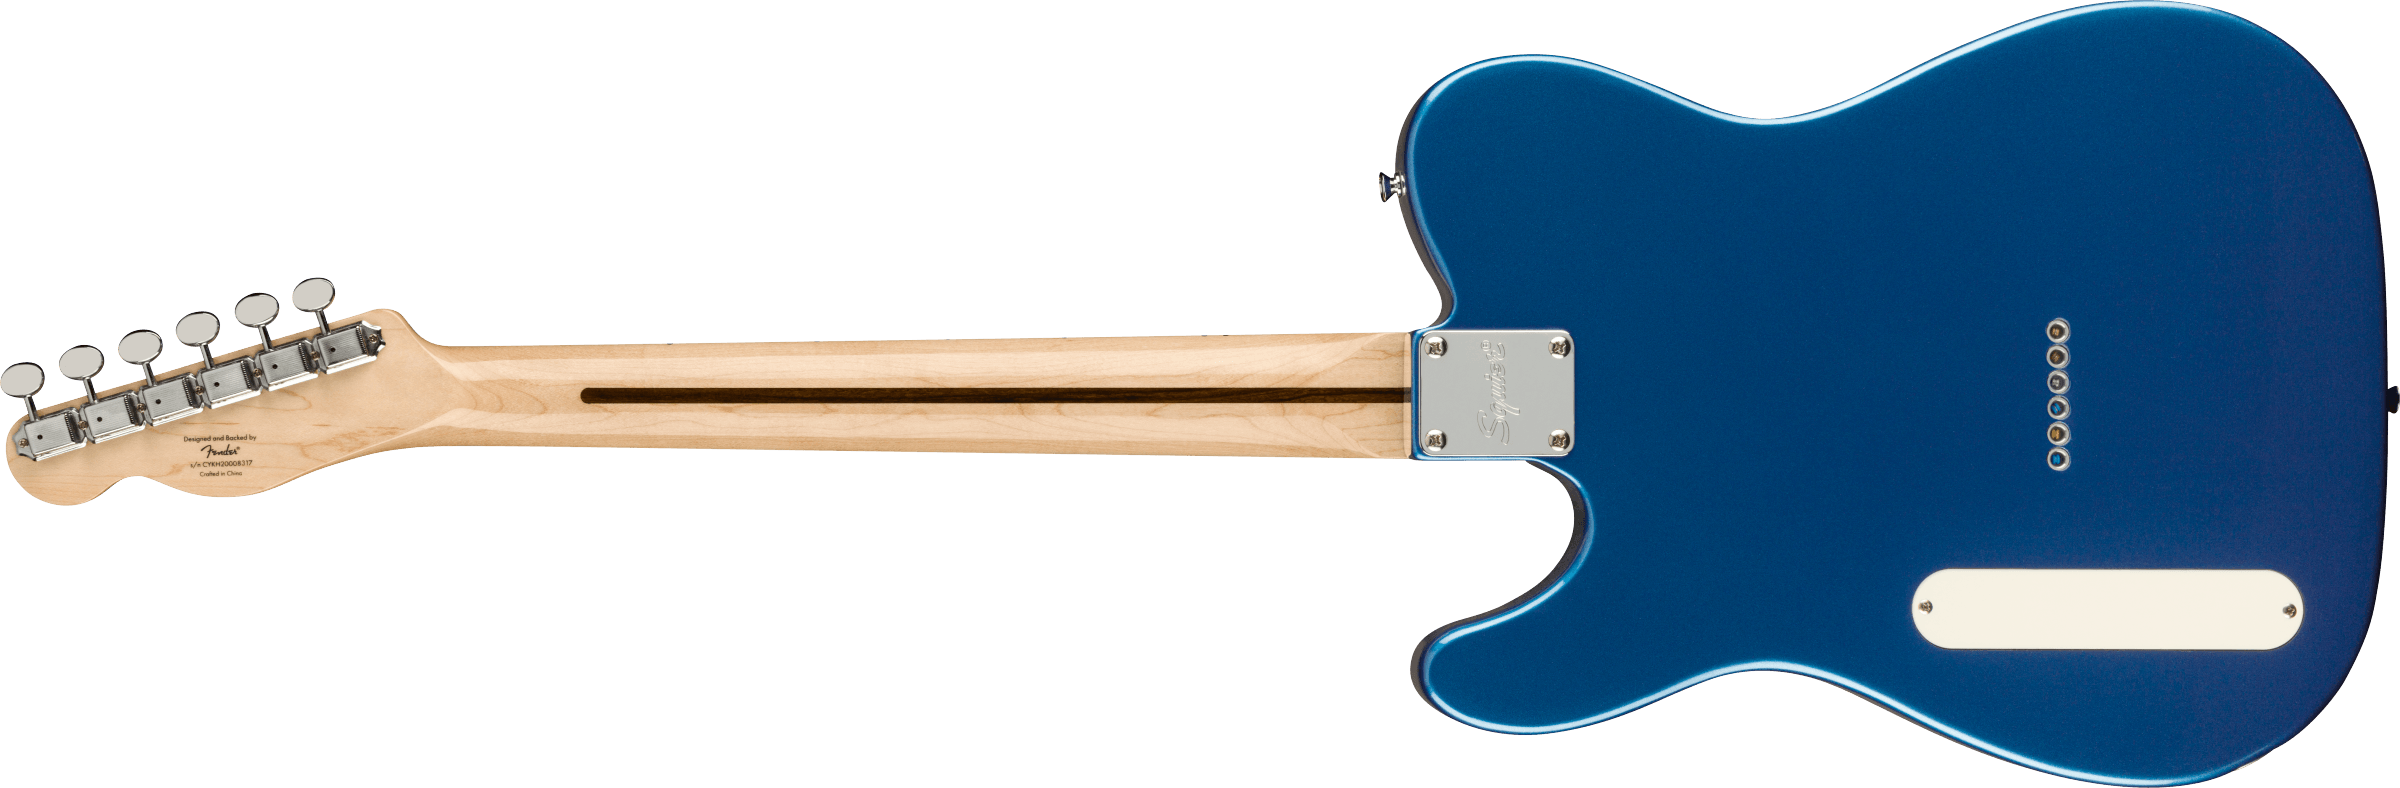 Squier Tele Cabronita Thinline Paranormal Ss Ht Mn - Lake Placid Blue - Televorm elektrische gitaar - Variation 1